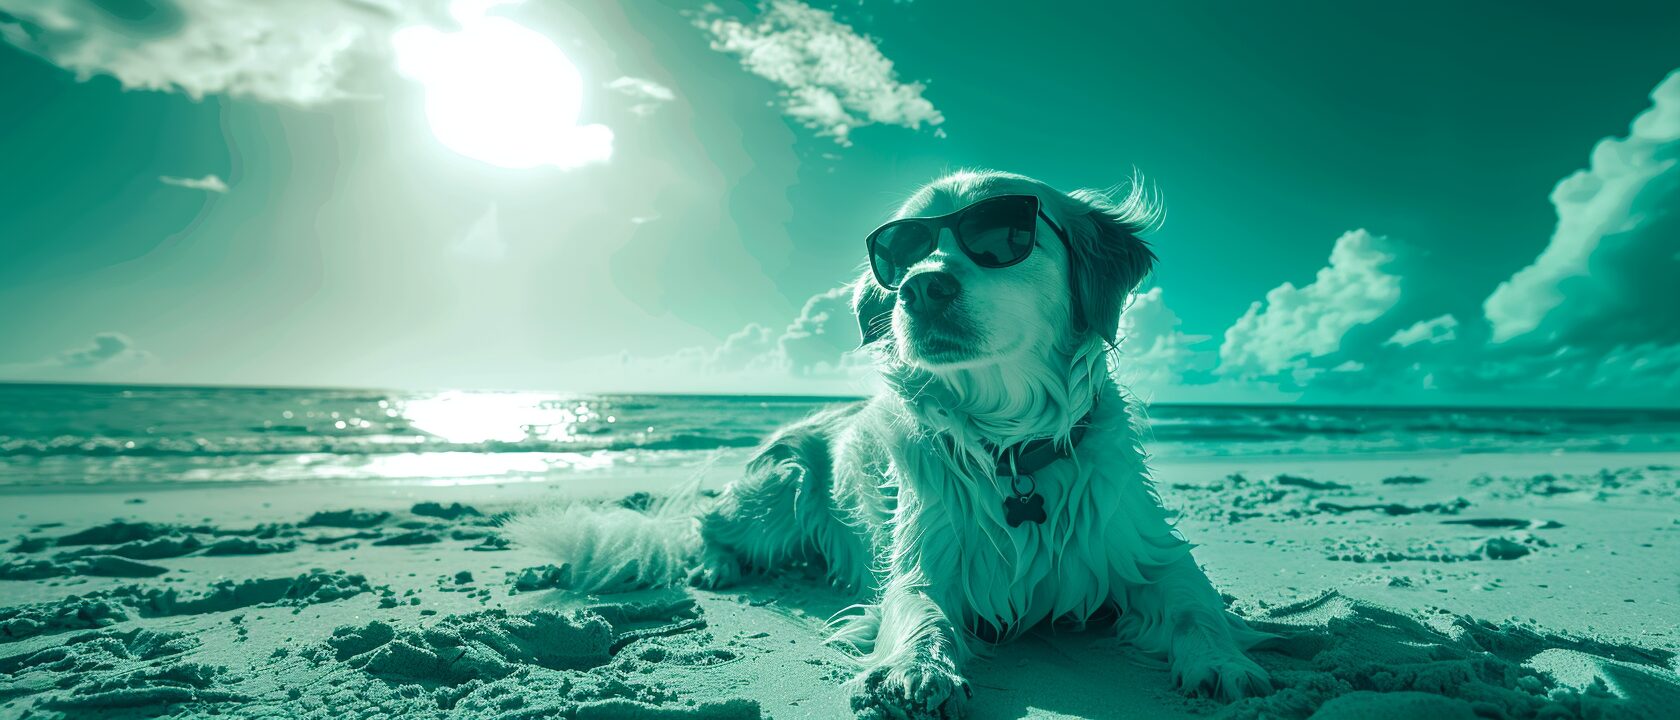 kvd01 a duotone photo of dog with sunglasses sun bathing on sun ba2711ee 8dba 42e3 9281 3658e2cd3cc9